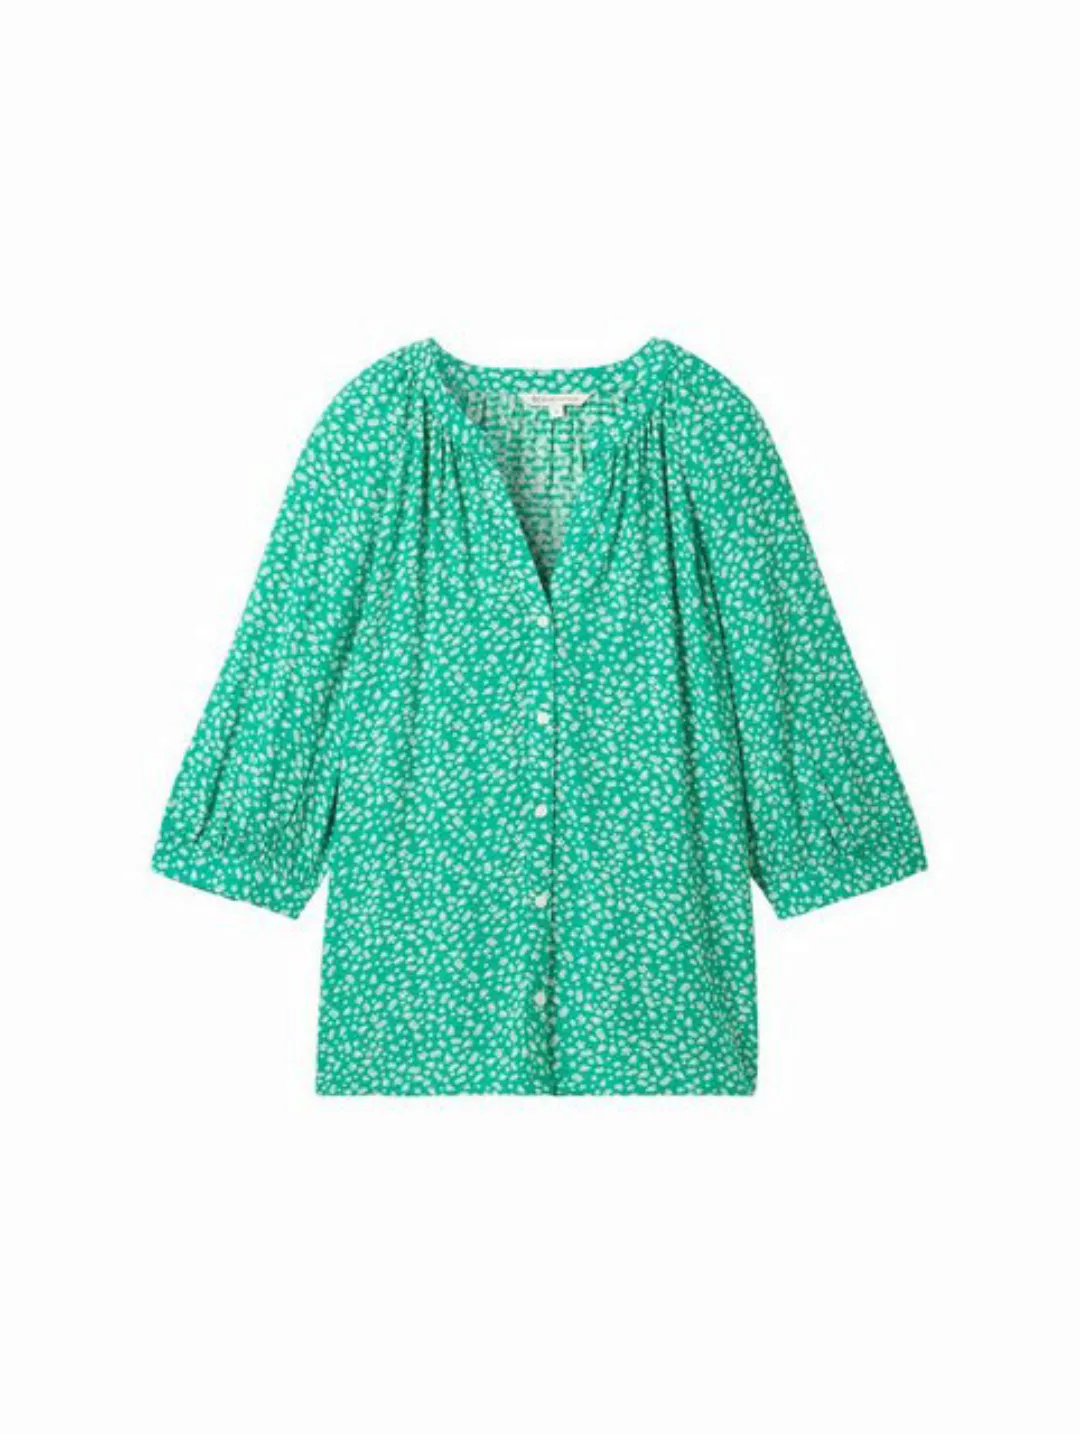 TOM TAILOR Denim Blusenshirt balloon sleeve blouse, green minimal print günstig online kaufen